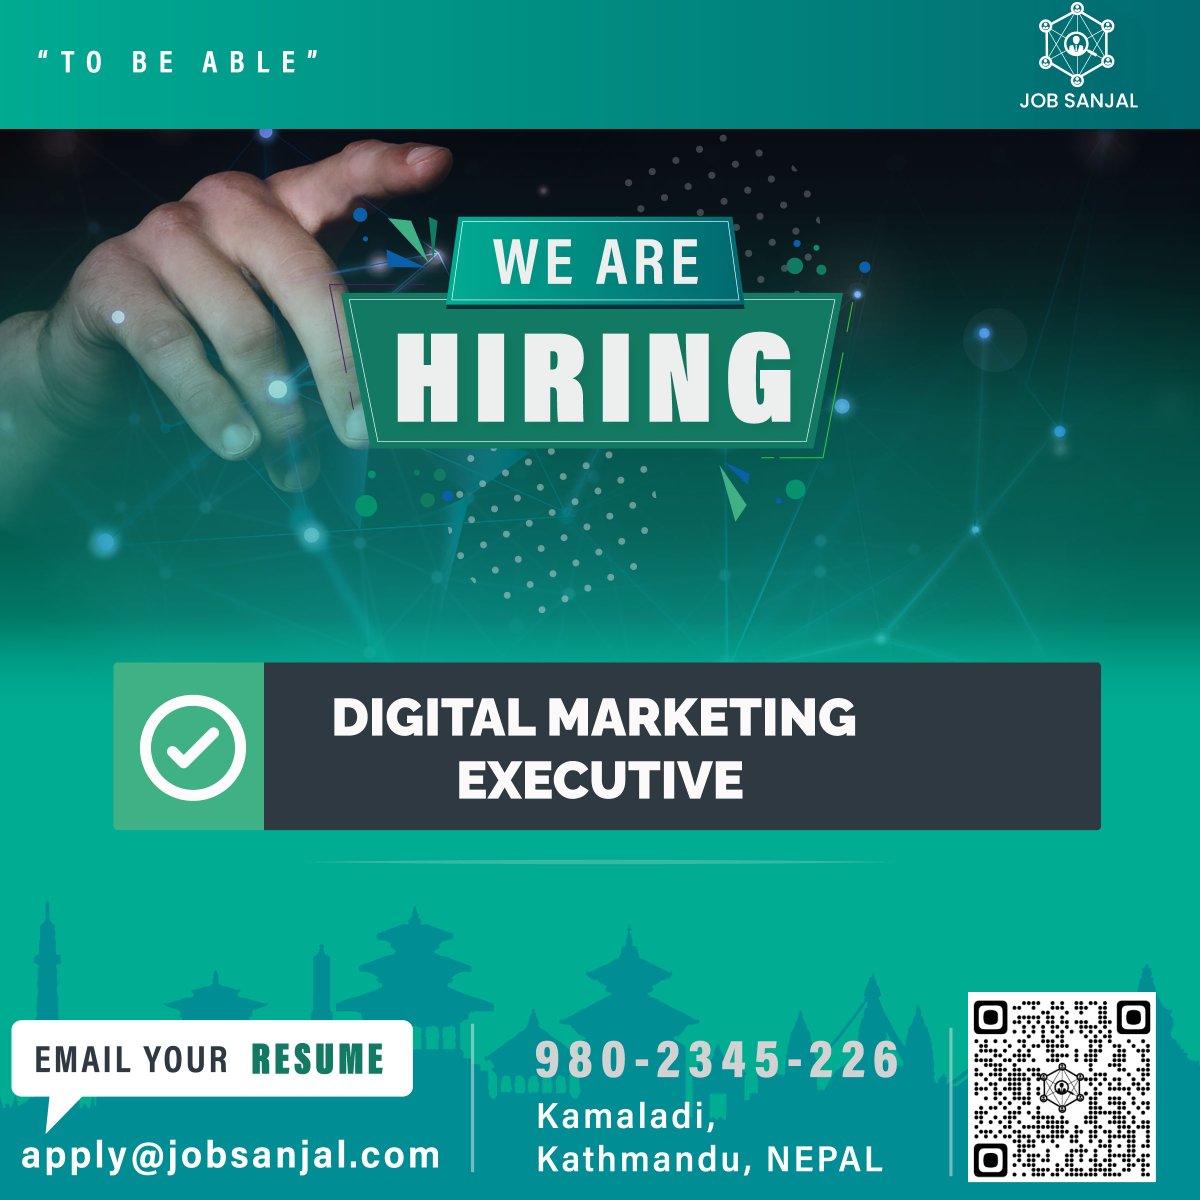 We are Hiring 
'DIGITAL MARKETERS' 
Simply Drop your CV to 
apply@jobsanjal.com
#digitalmarketing #DigitalMarketingJob #jobsinepal #jobsanjal #jobsnow